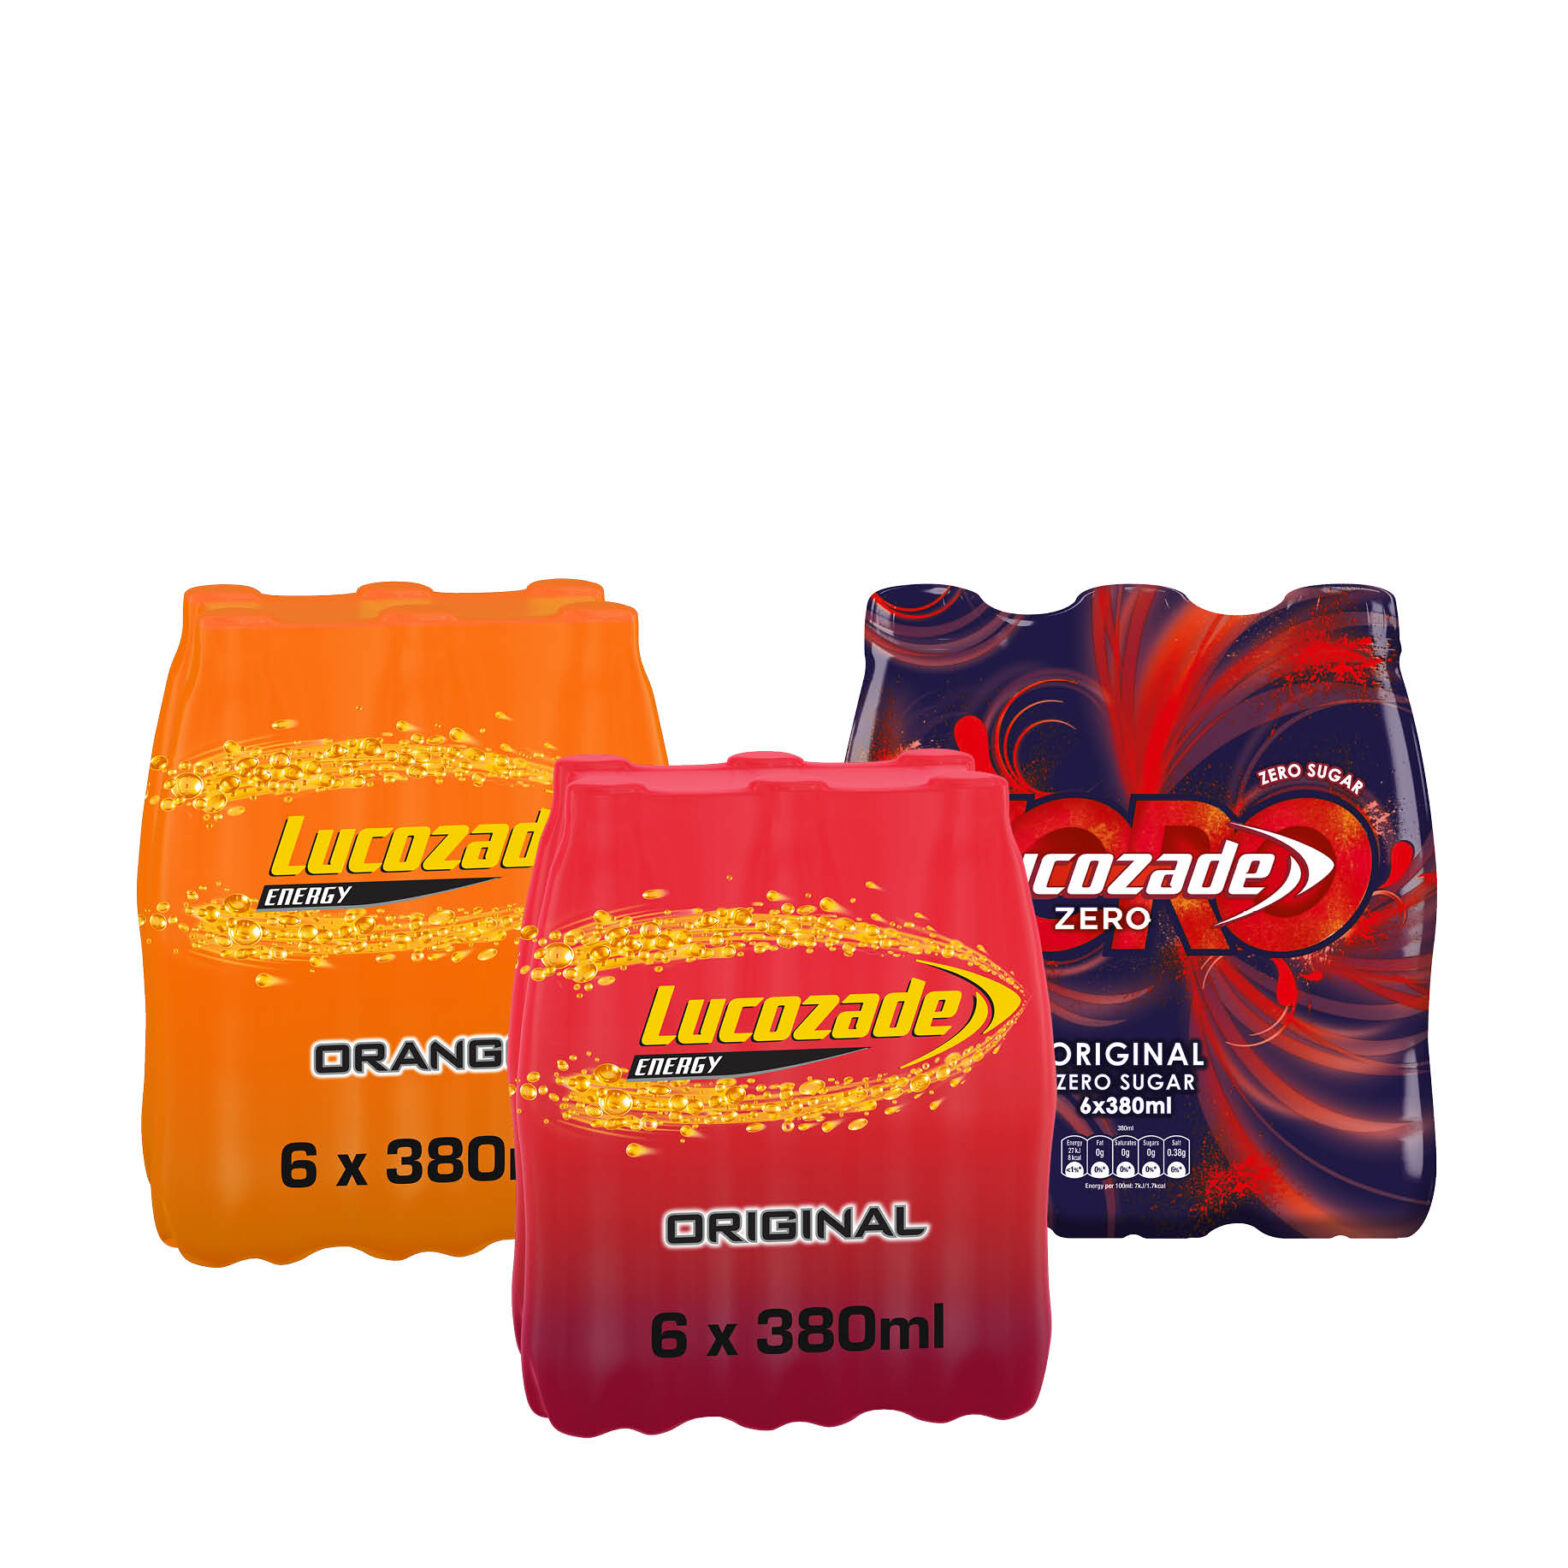 Lucozade Energy Orange /Original / Zero Bottle 6 Pack